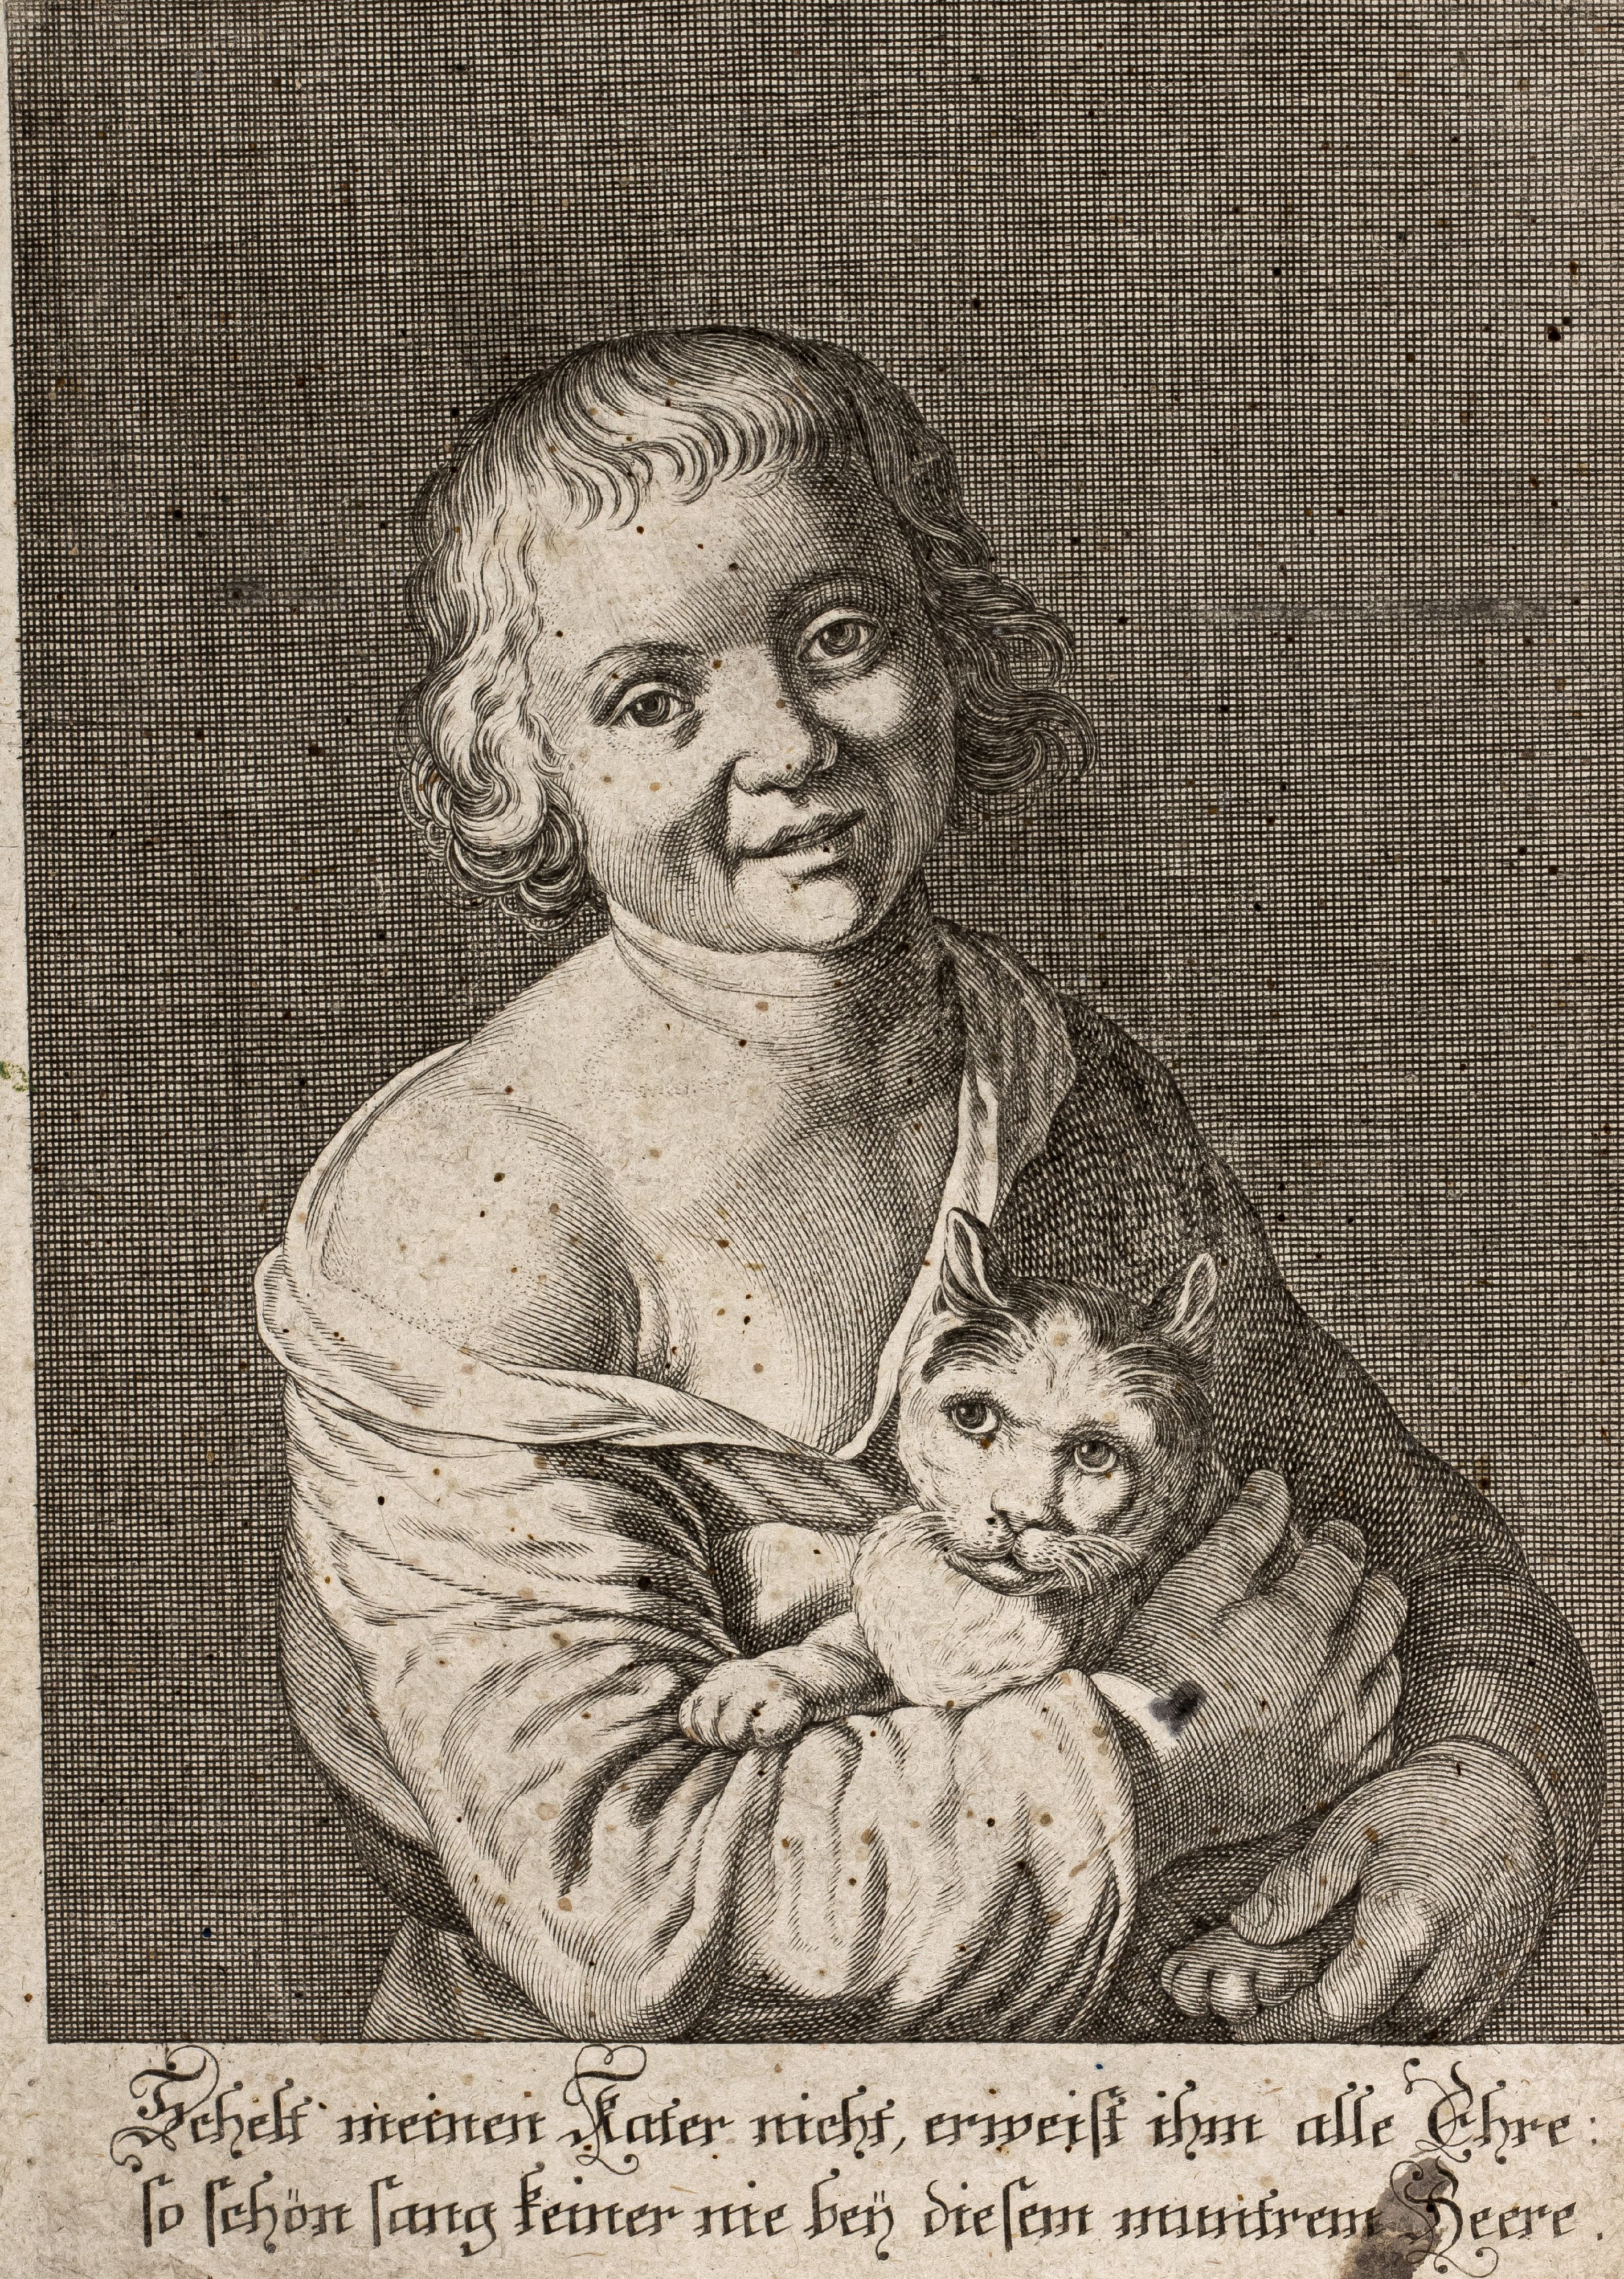 Kleinschmidt, Johann Jacob | 1678 Augsburg - 1772 Ebenda - Image 3 of 14